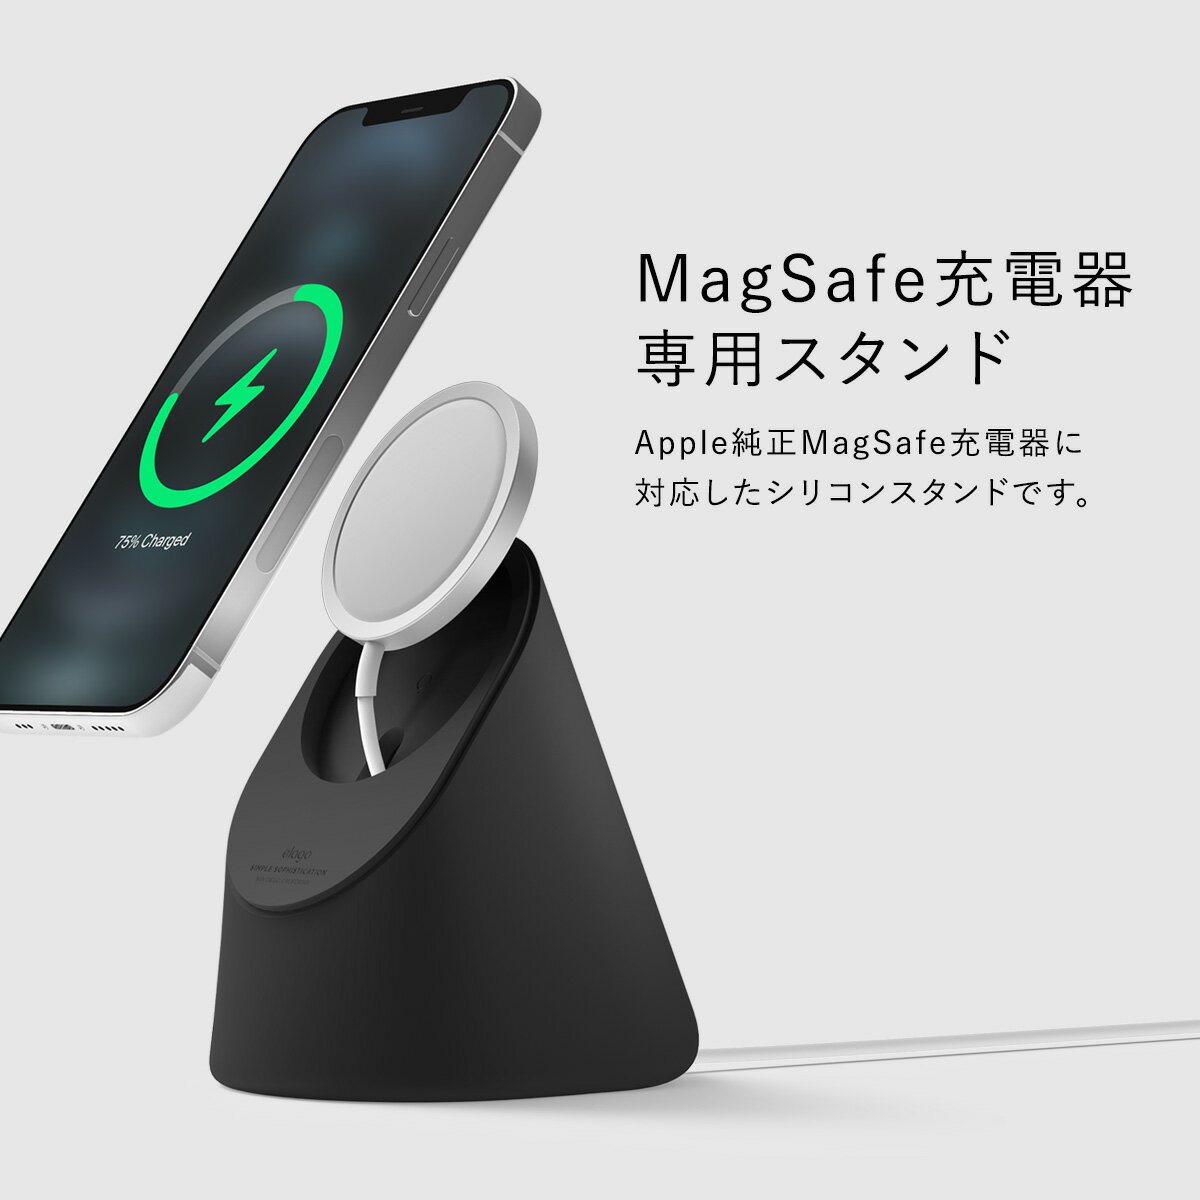 MagSafe スタンド iPhone12 各種 MagSafe充電器 用 シリコン 卓上 充電スタンド マグセーフ 充電 ワイヤレス スマホ充電 スマホスタンド ケーブル 収納 スマホ充電スタンド [ iPhone12 Pro Max / iPhone12Pro /iPhone12 mini アイフォン12 対応 ] elago MS1 CHARGING STAND